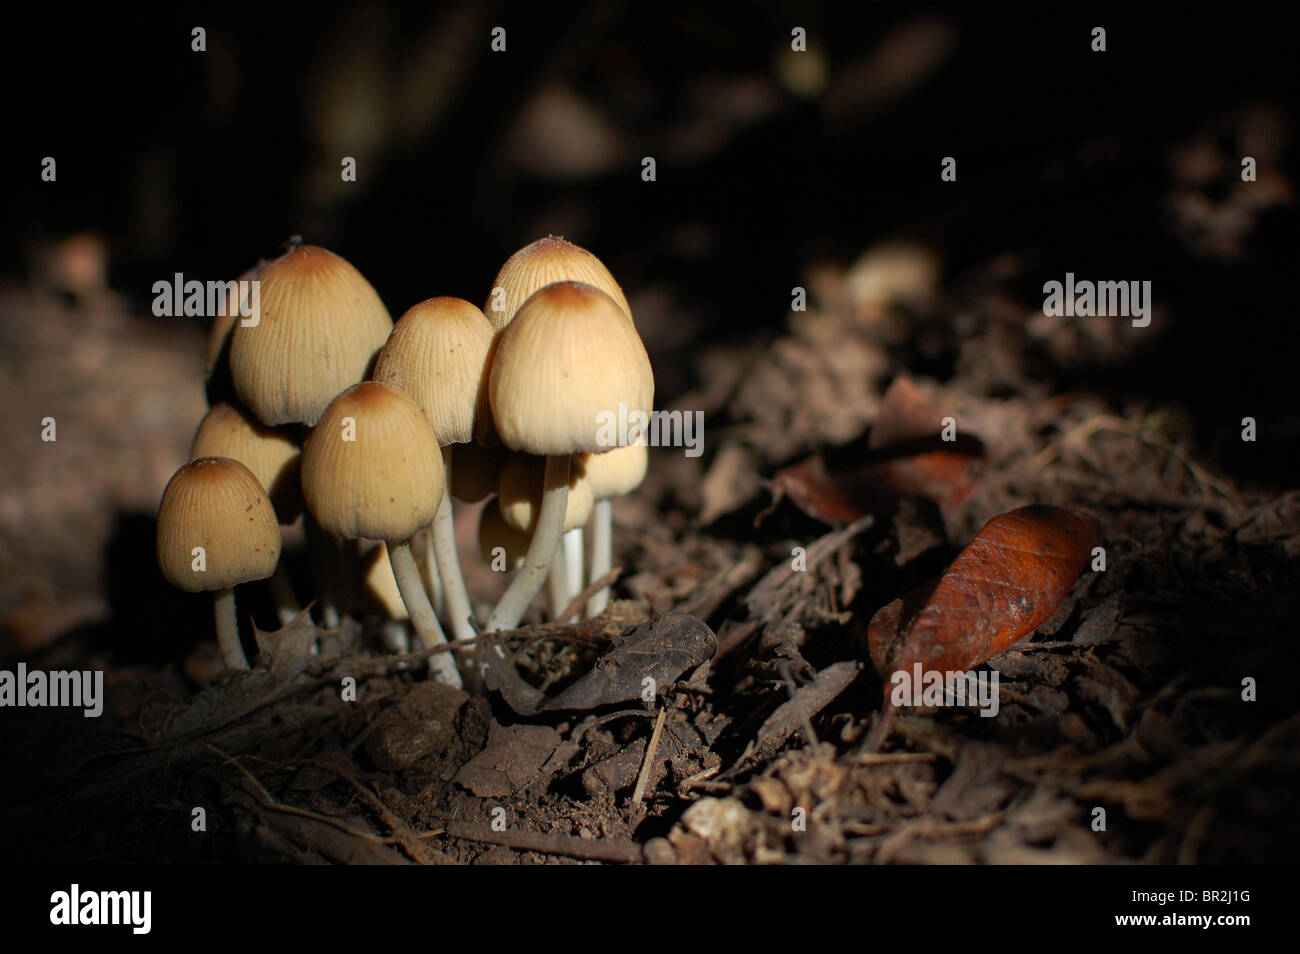 Fungi-growing-on-woodland-floor-BR2J1G.j